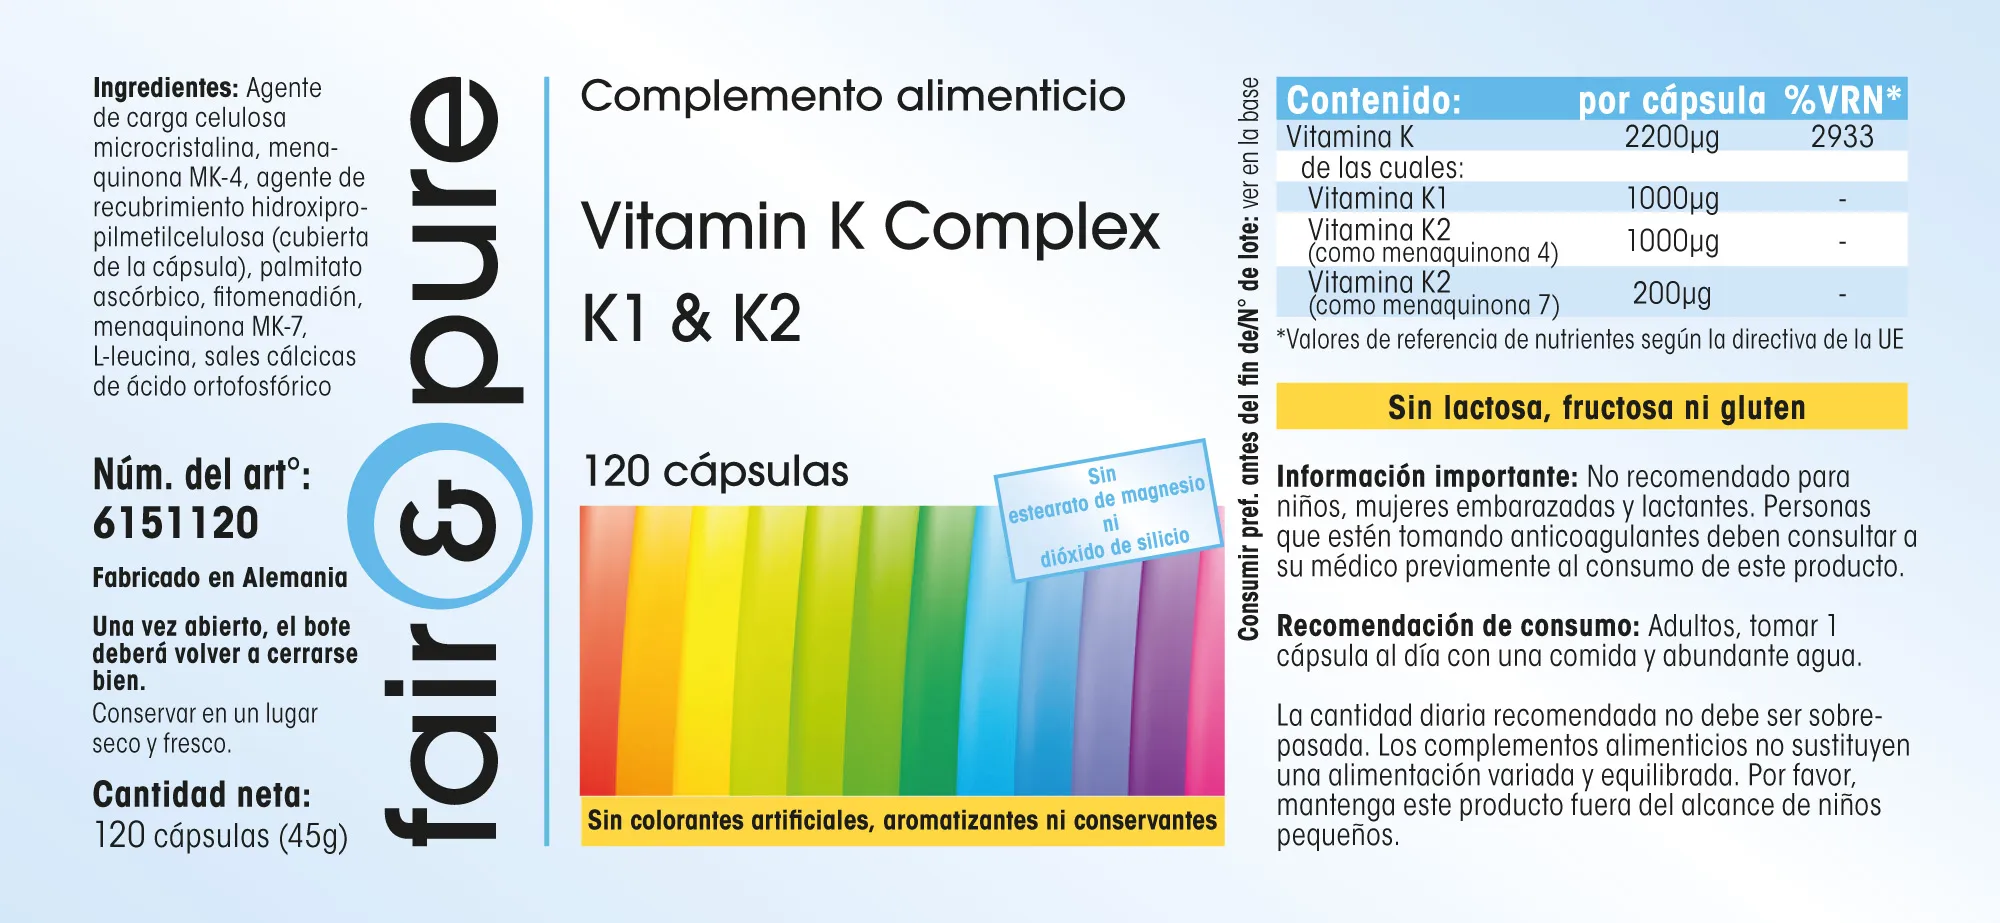 Vitamine K Complex K1 & K2